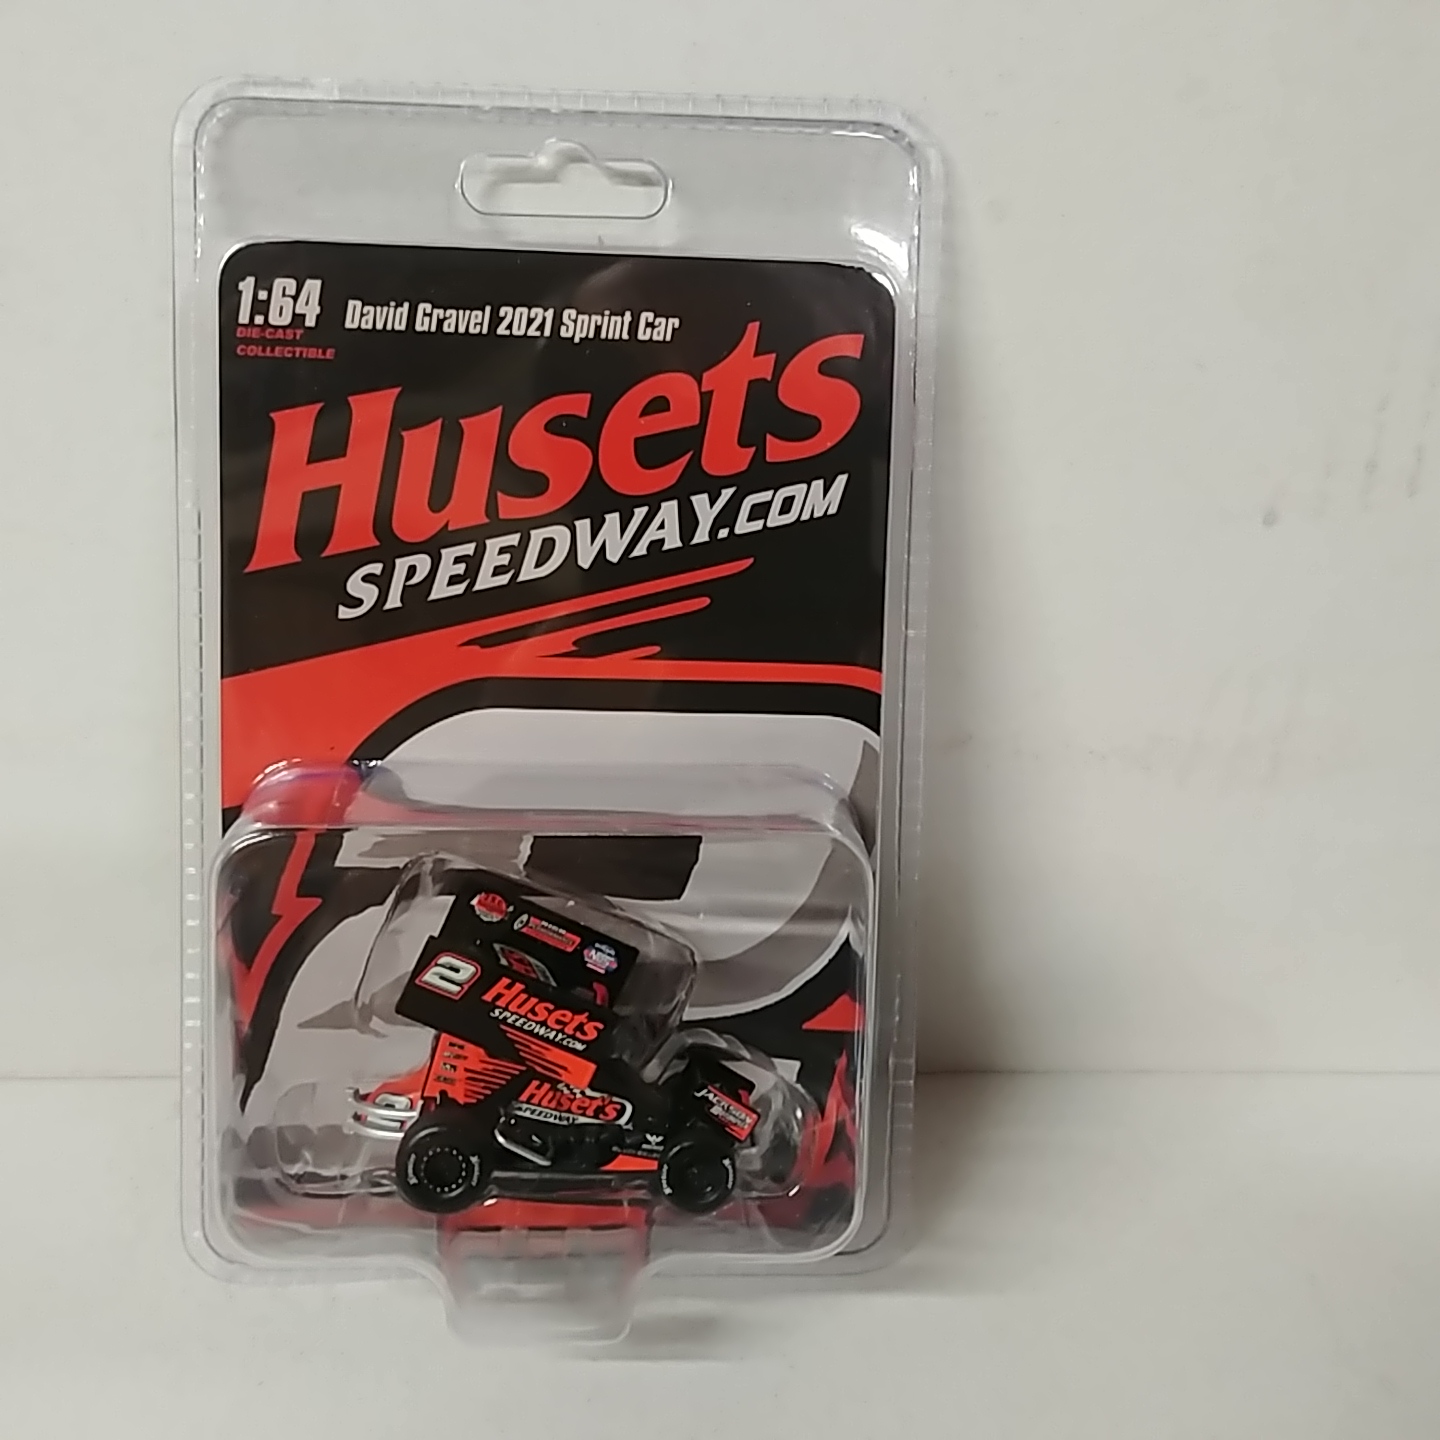 2021 David Gravel 1/64th Huset's Speedway sprint car